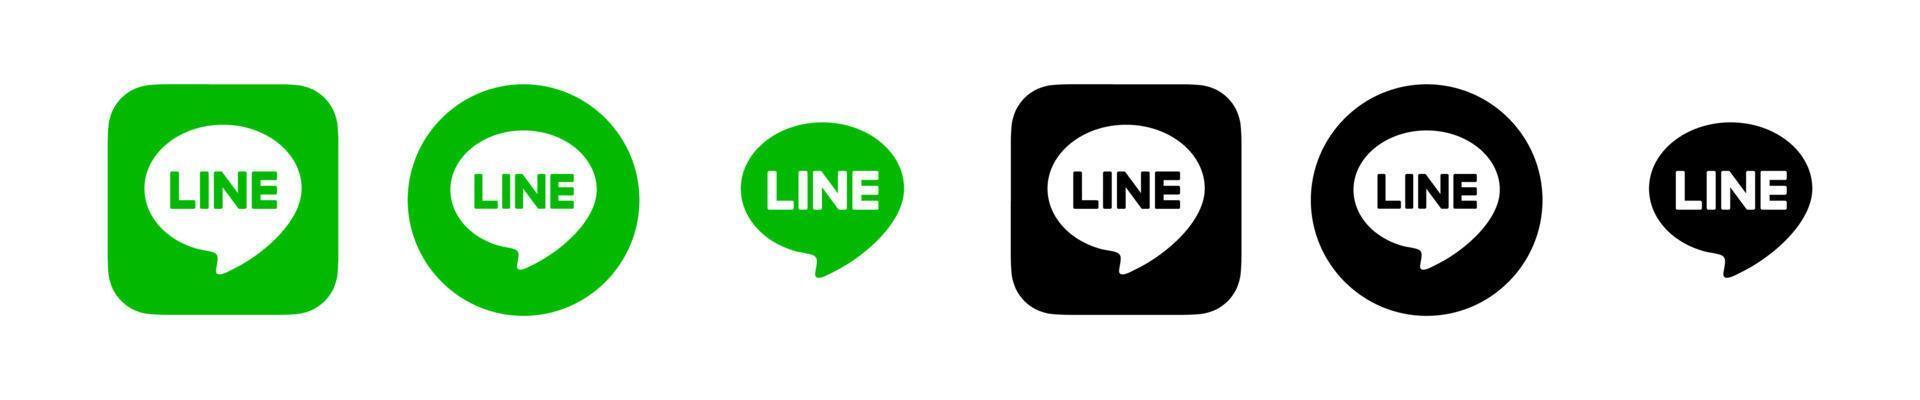 Line app logo, Line app symbol, Line icon free vector